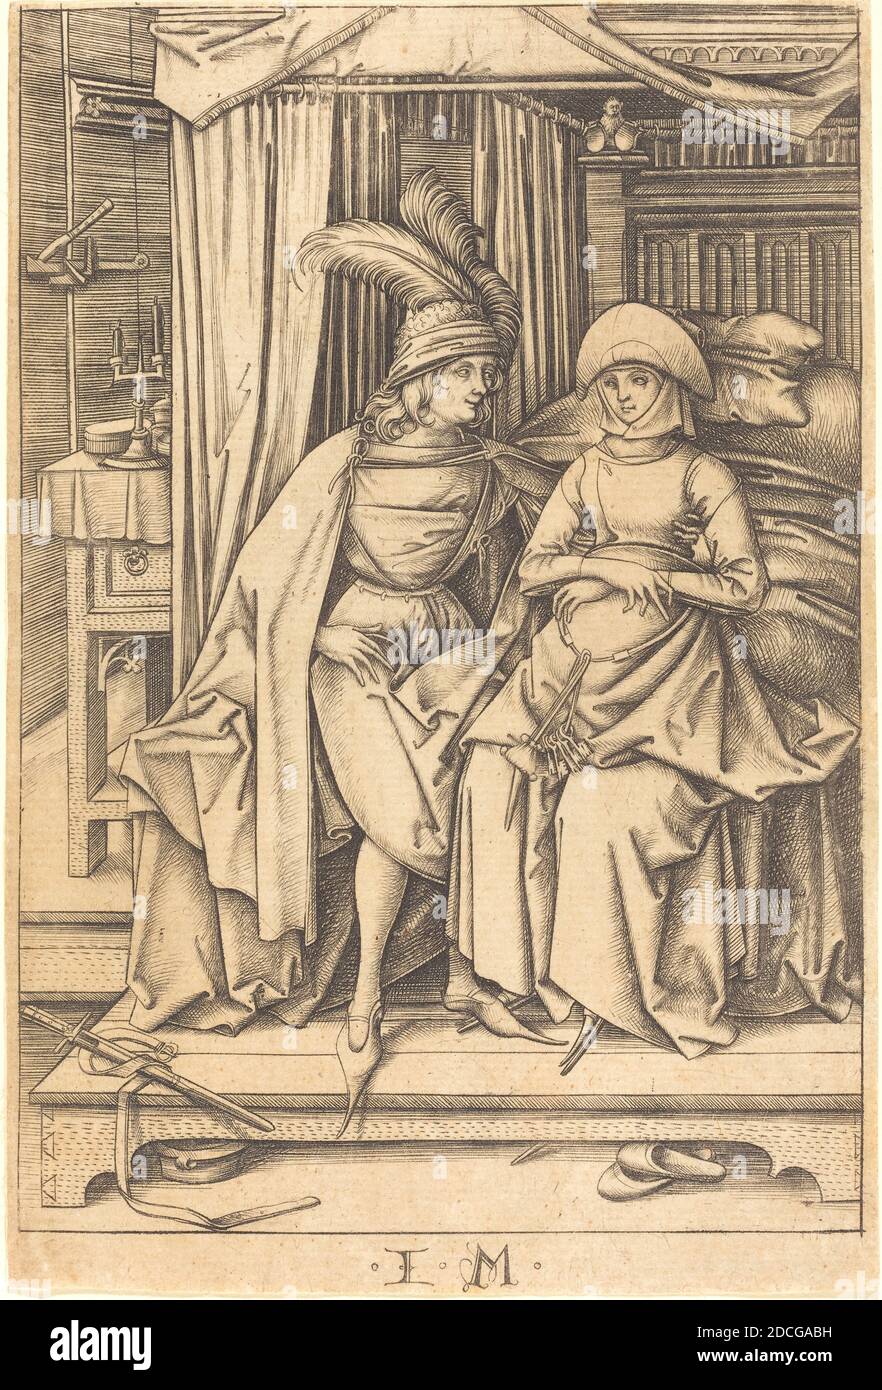 Israhel van Meckenem, (artist), German, c. 1445 - 1503, Couple Seated on a Bed, Scenes of Daily Life, (series), c. 1495/1503, engraving Stock Photo